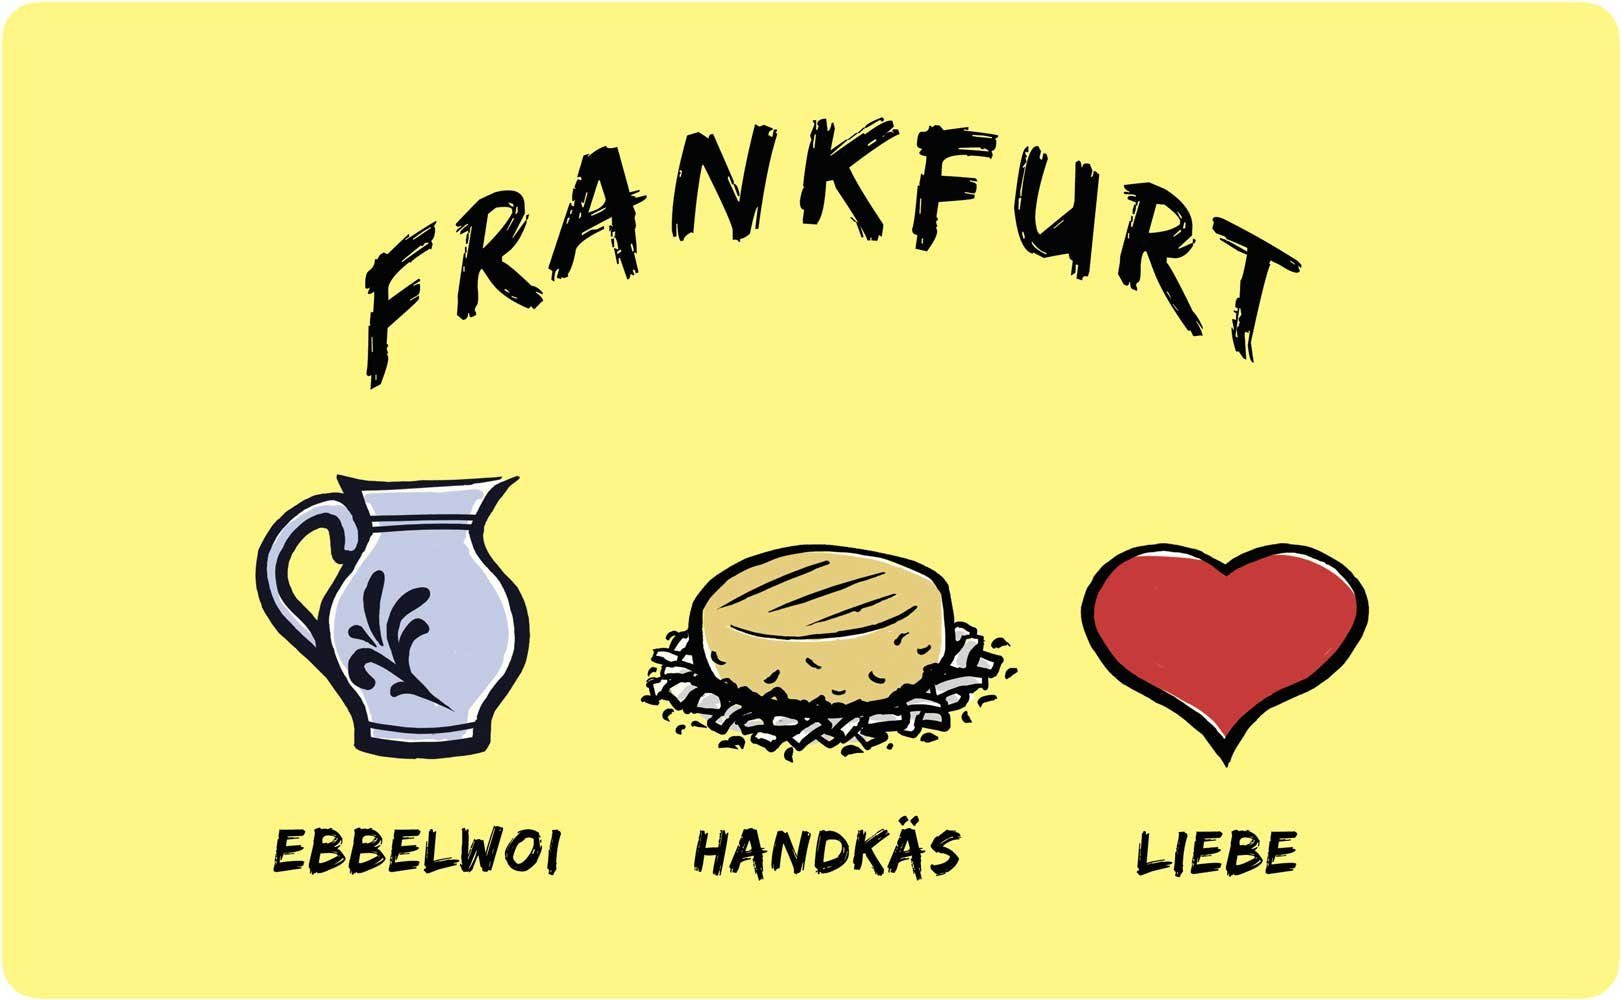 Frühstücksbrett Ebbelwoi Stadtmeister - Handkäs die - Frankfurt: Liebe, Melamin